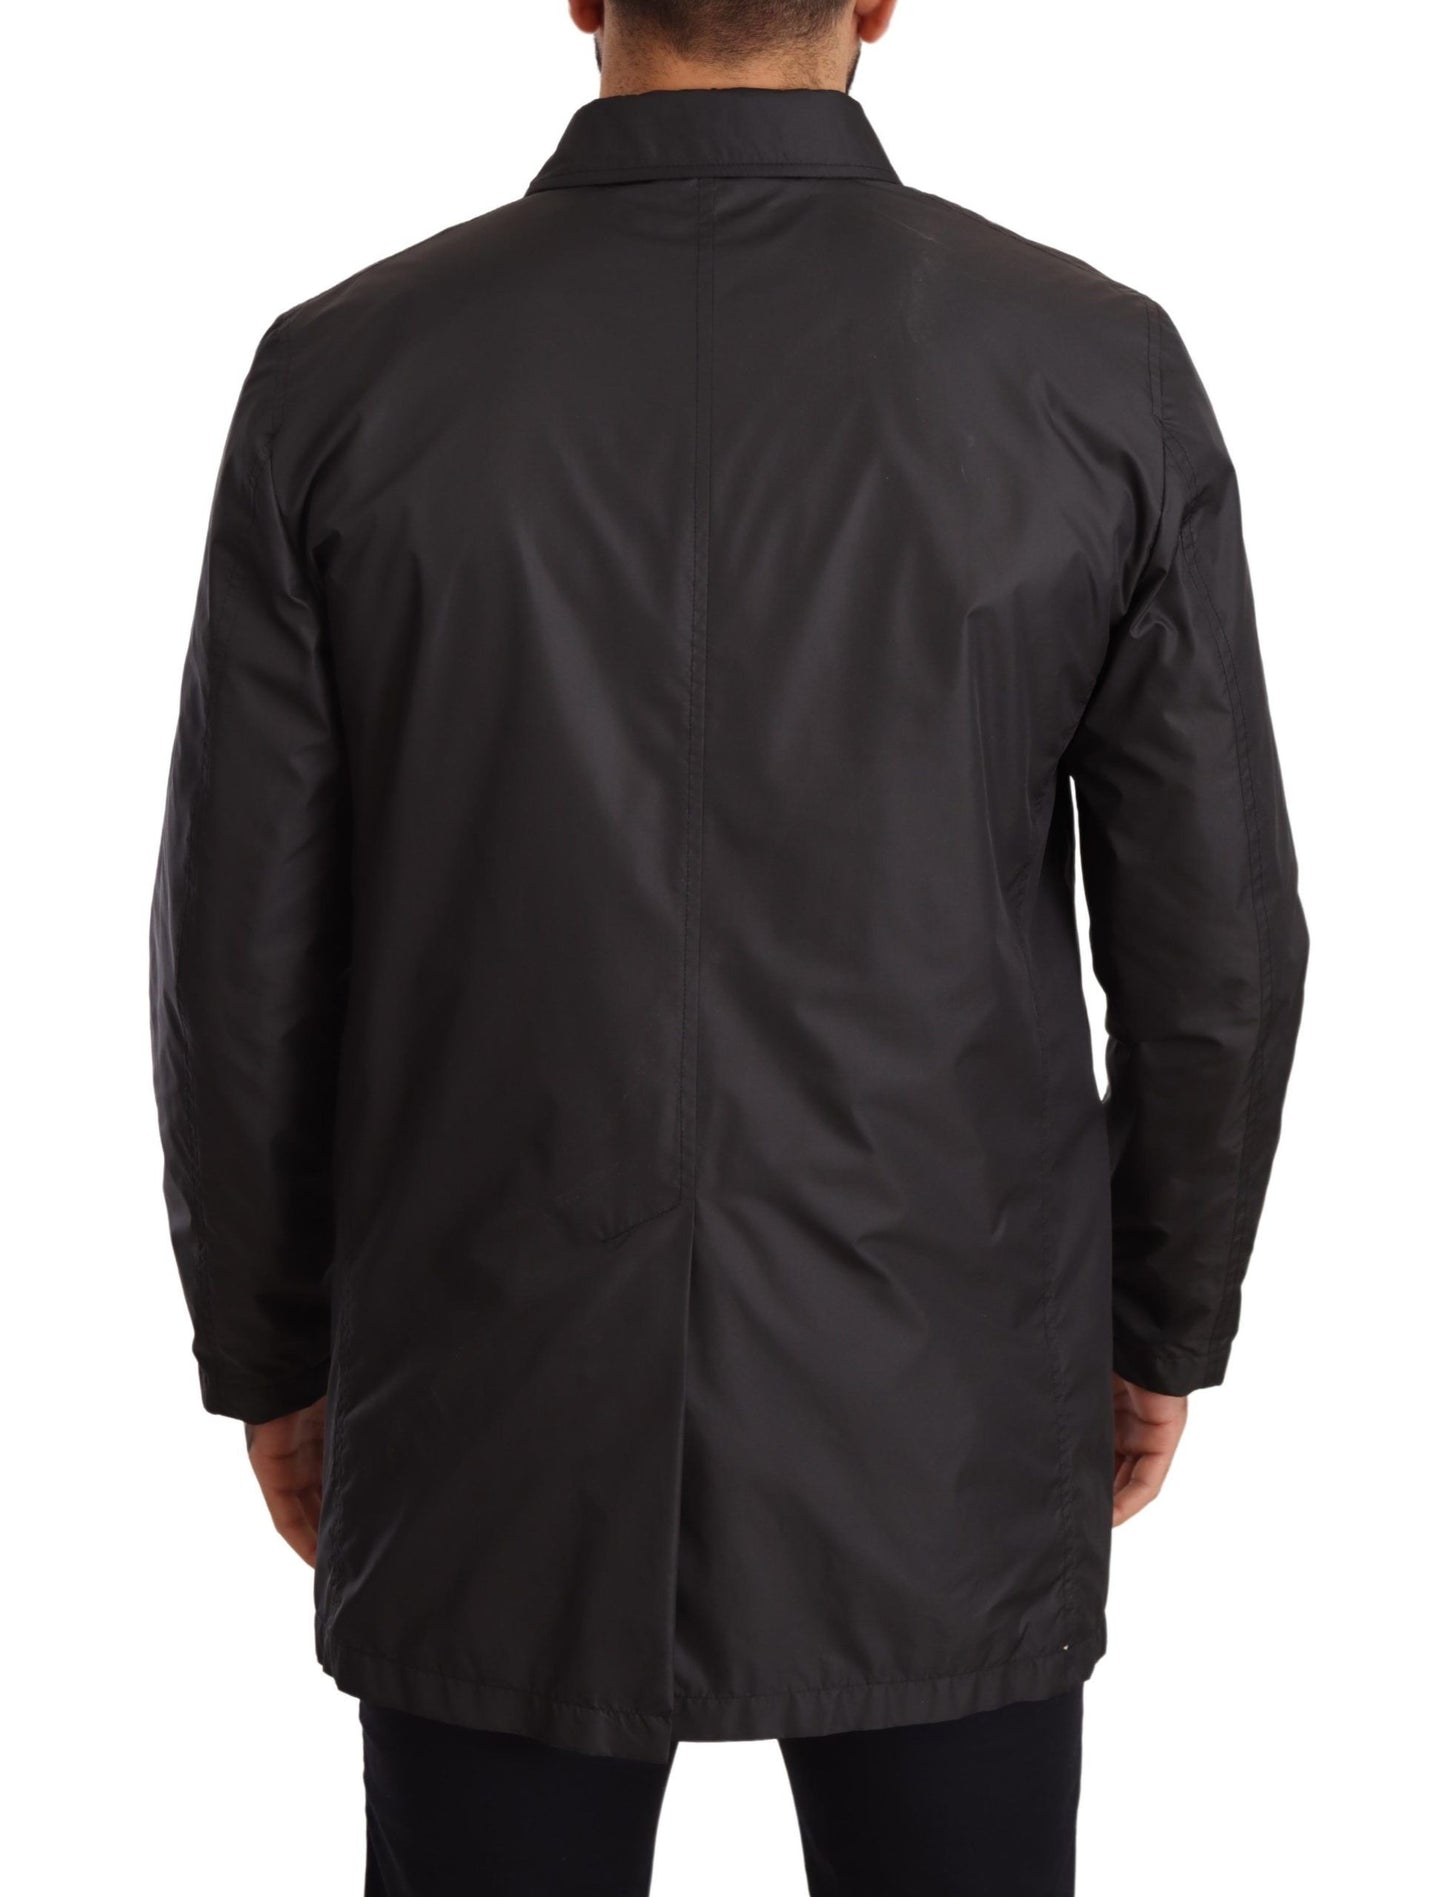 Elegant Black Trench Coat for Sophisticated Men